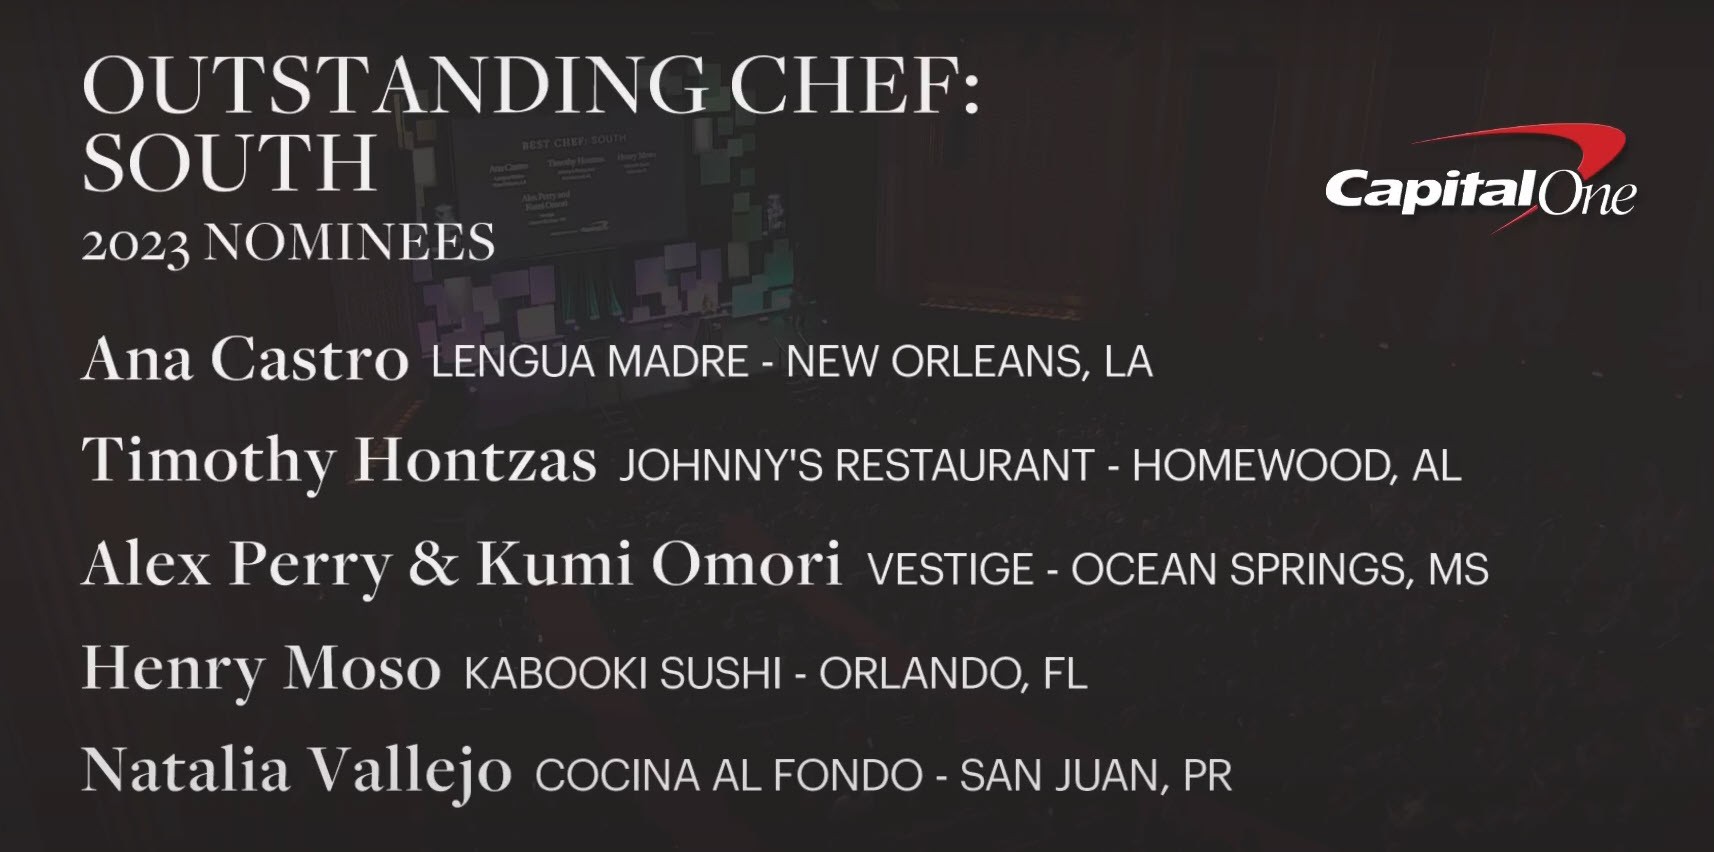 Kabooki Sushi chef Henry Moso is a James Beard Award finalist